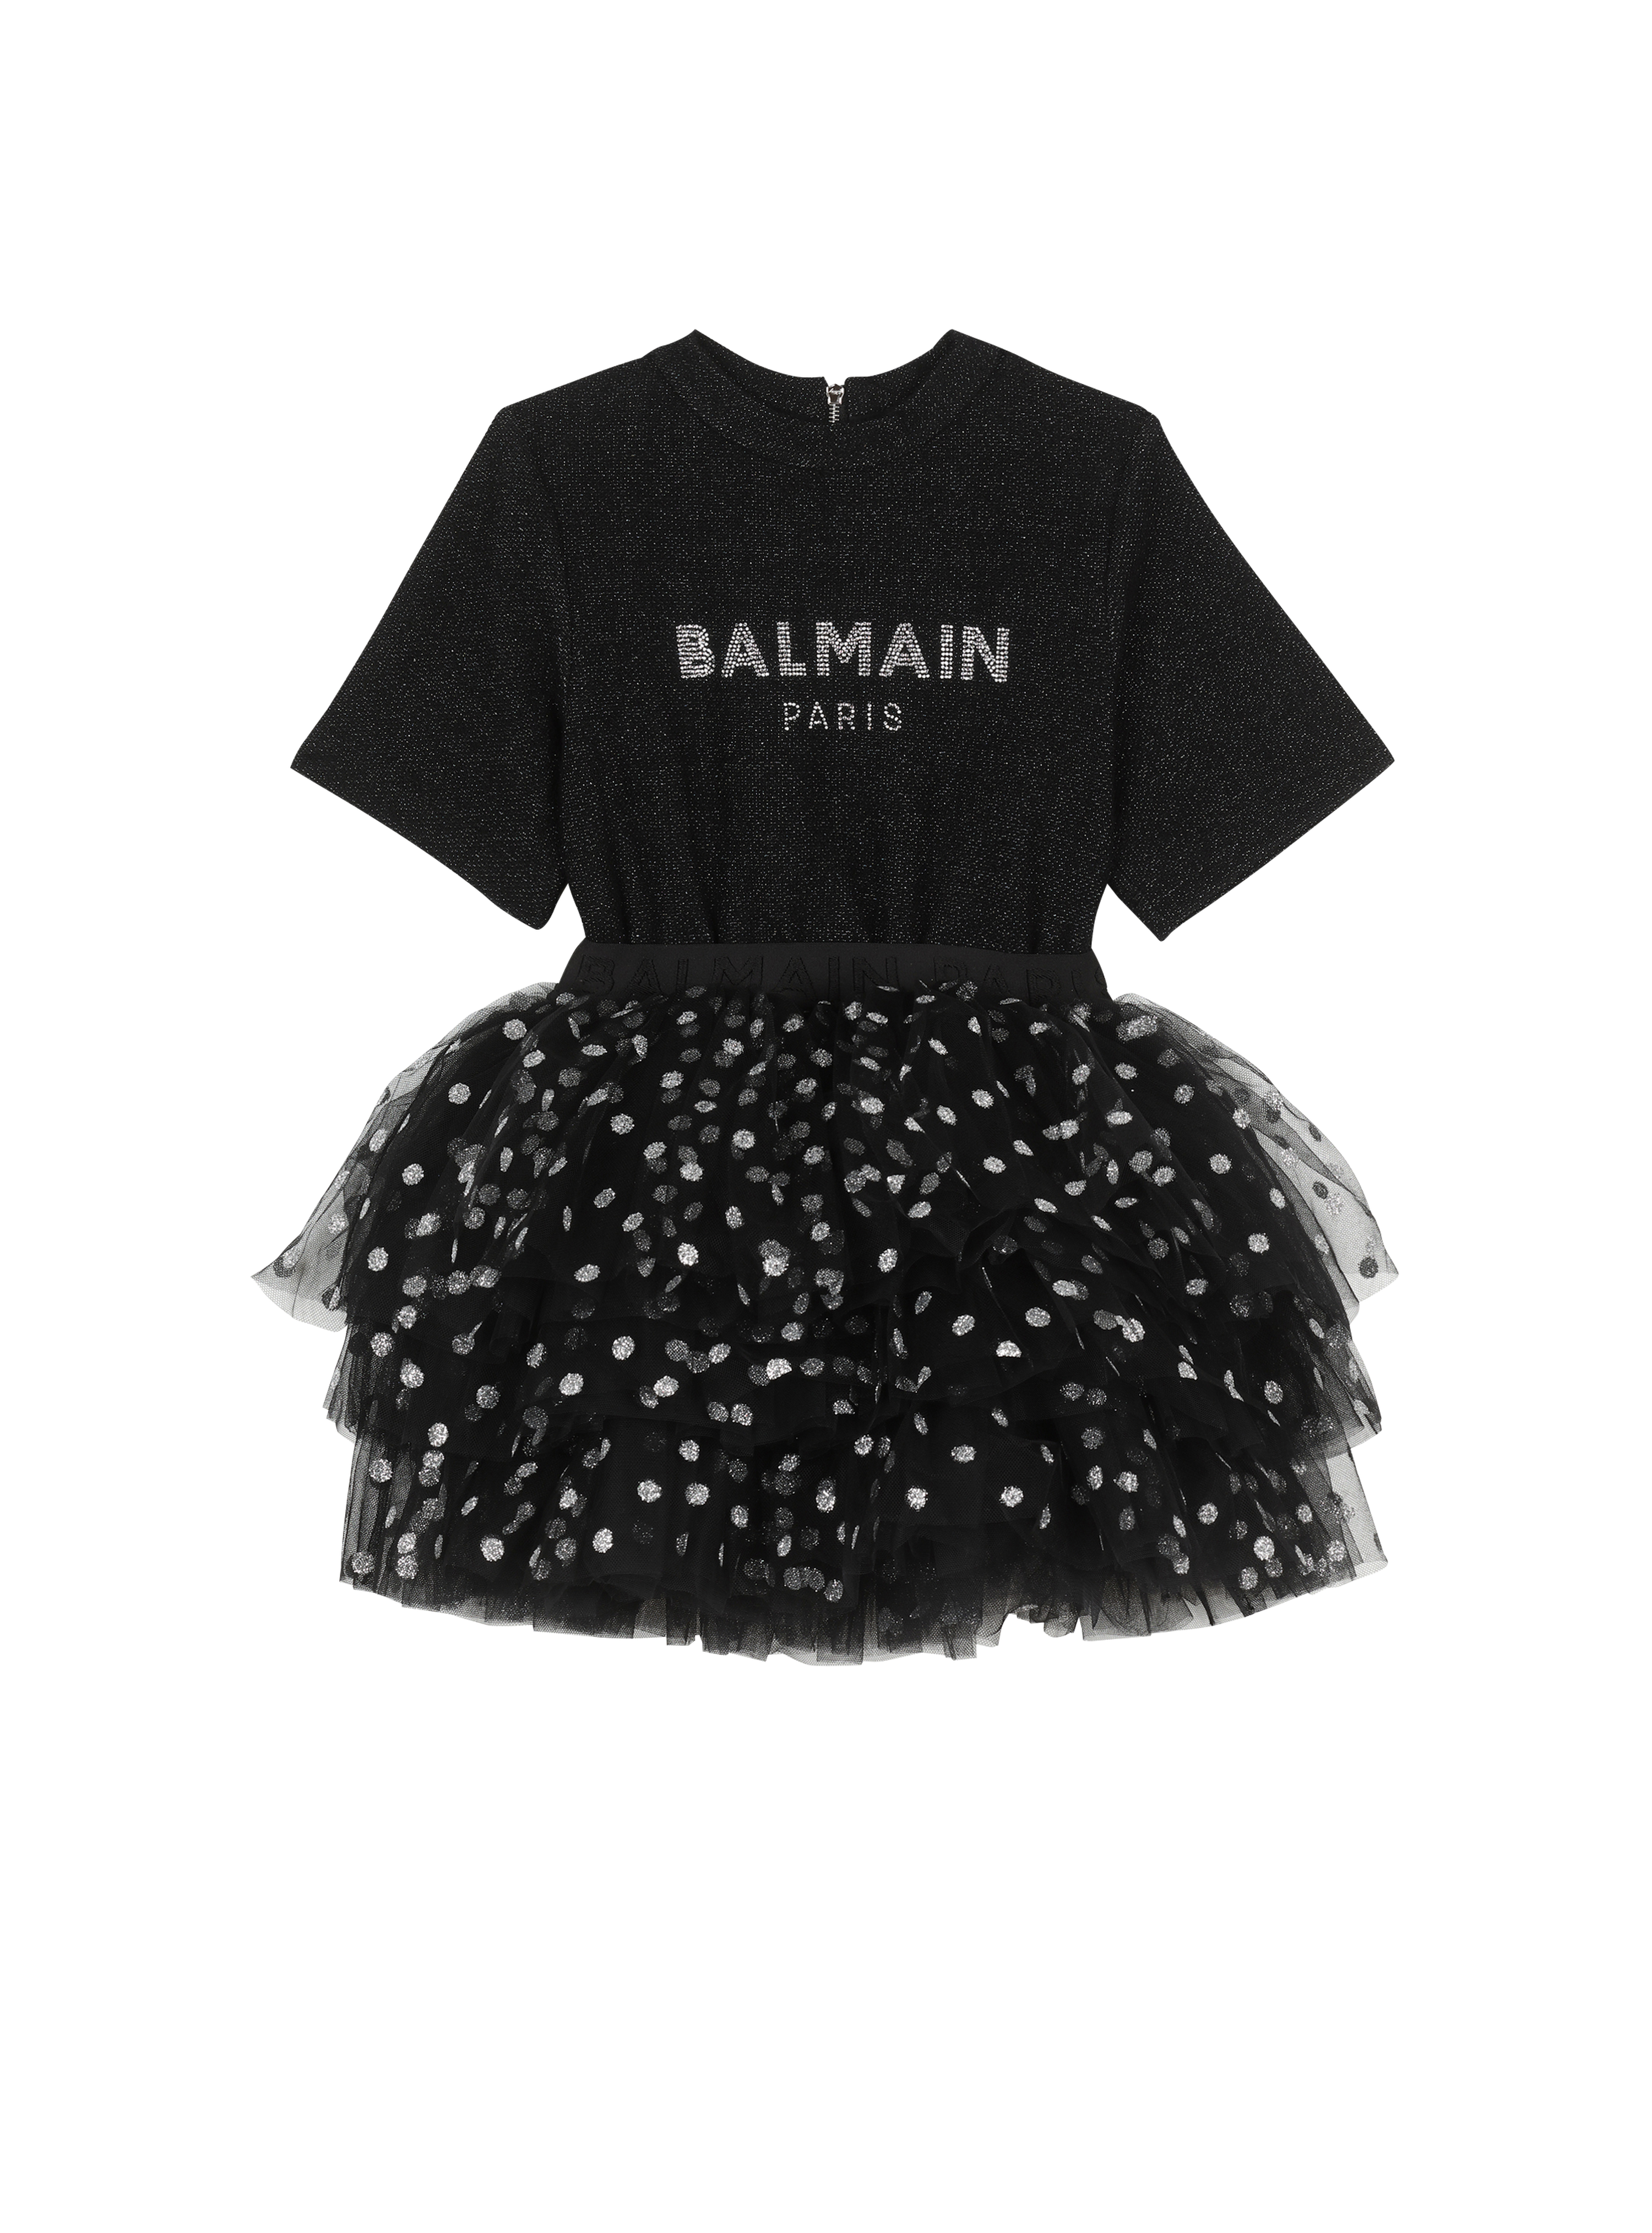 Cotton dress with Balmain logo, black